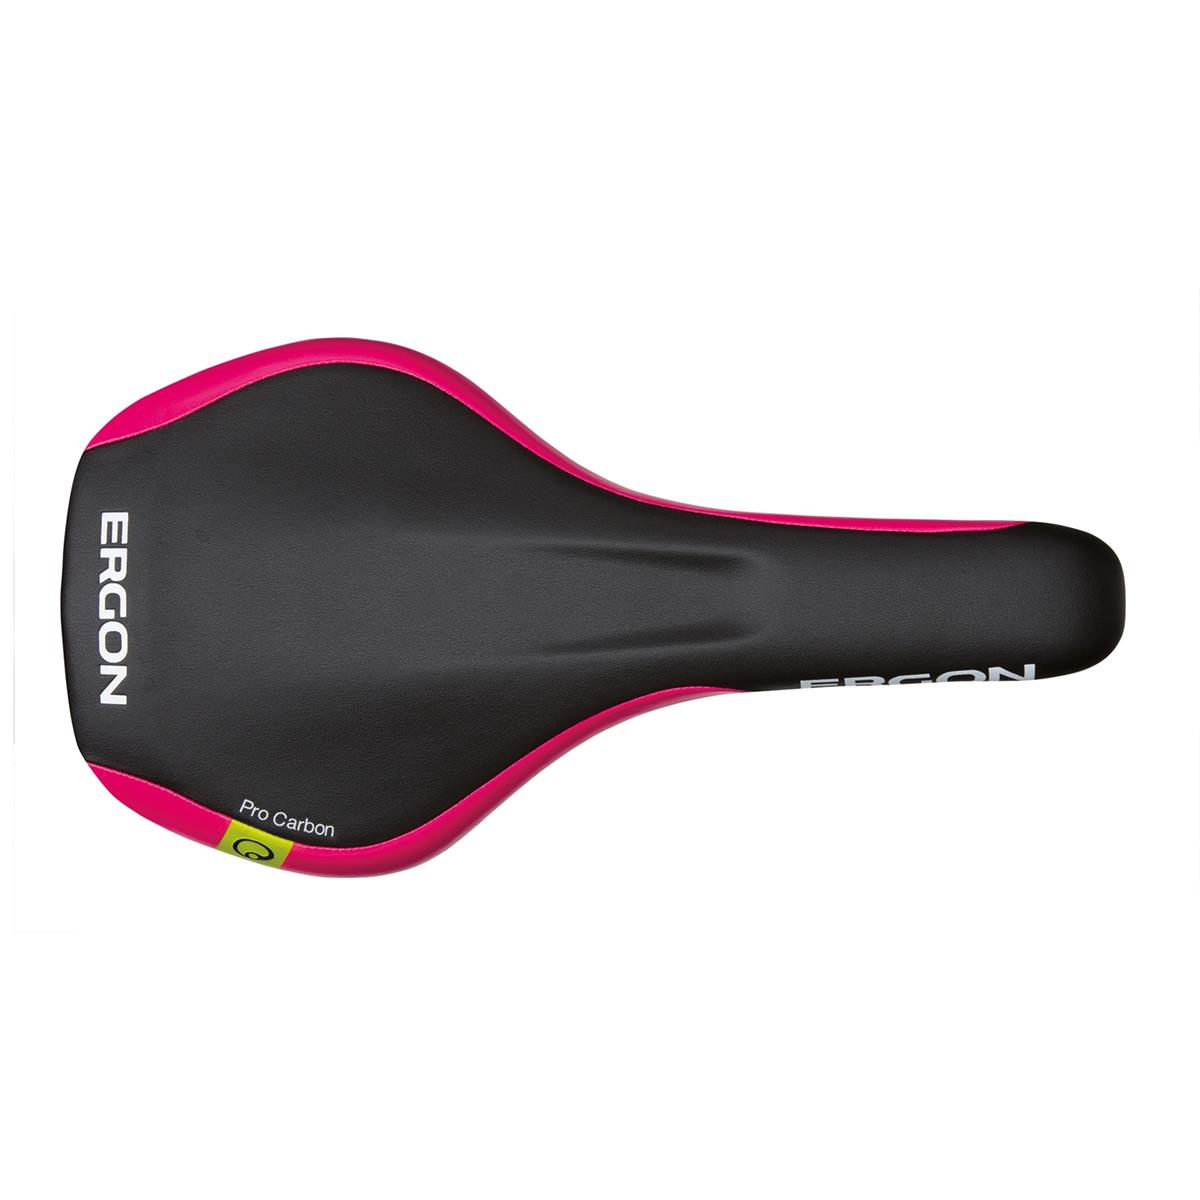 Ergon Unisex Fahrradsattel SME3 Pro Carbon, Pink | SAM's